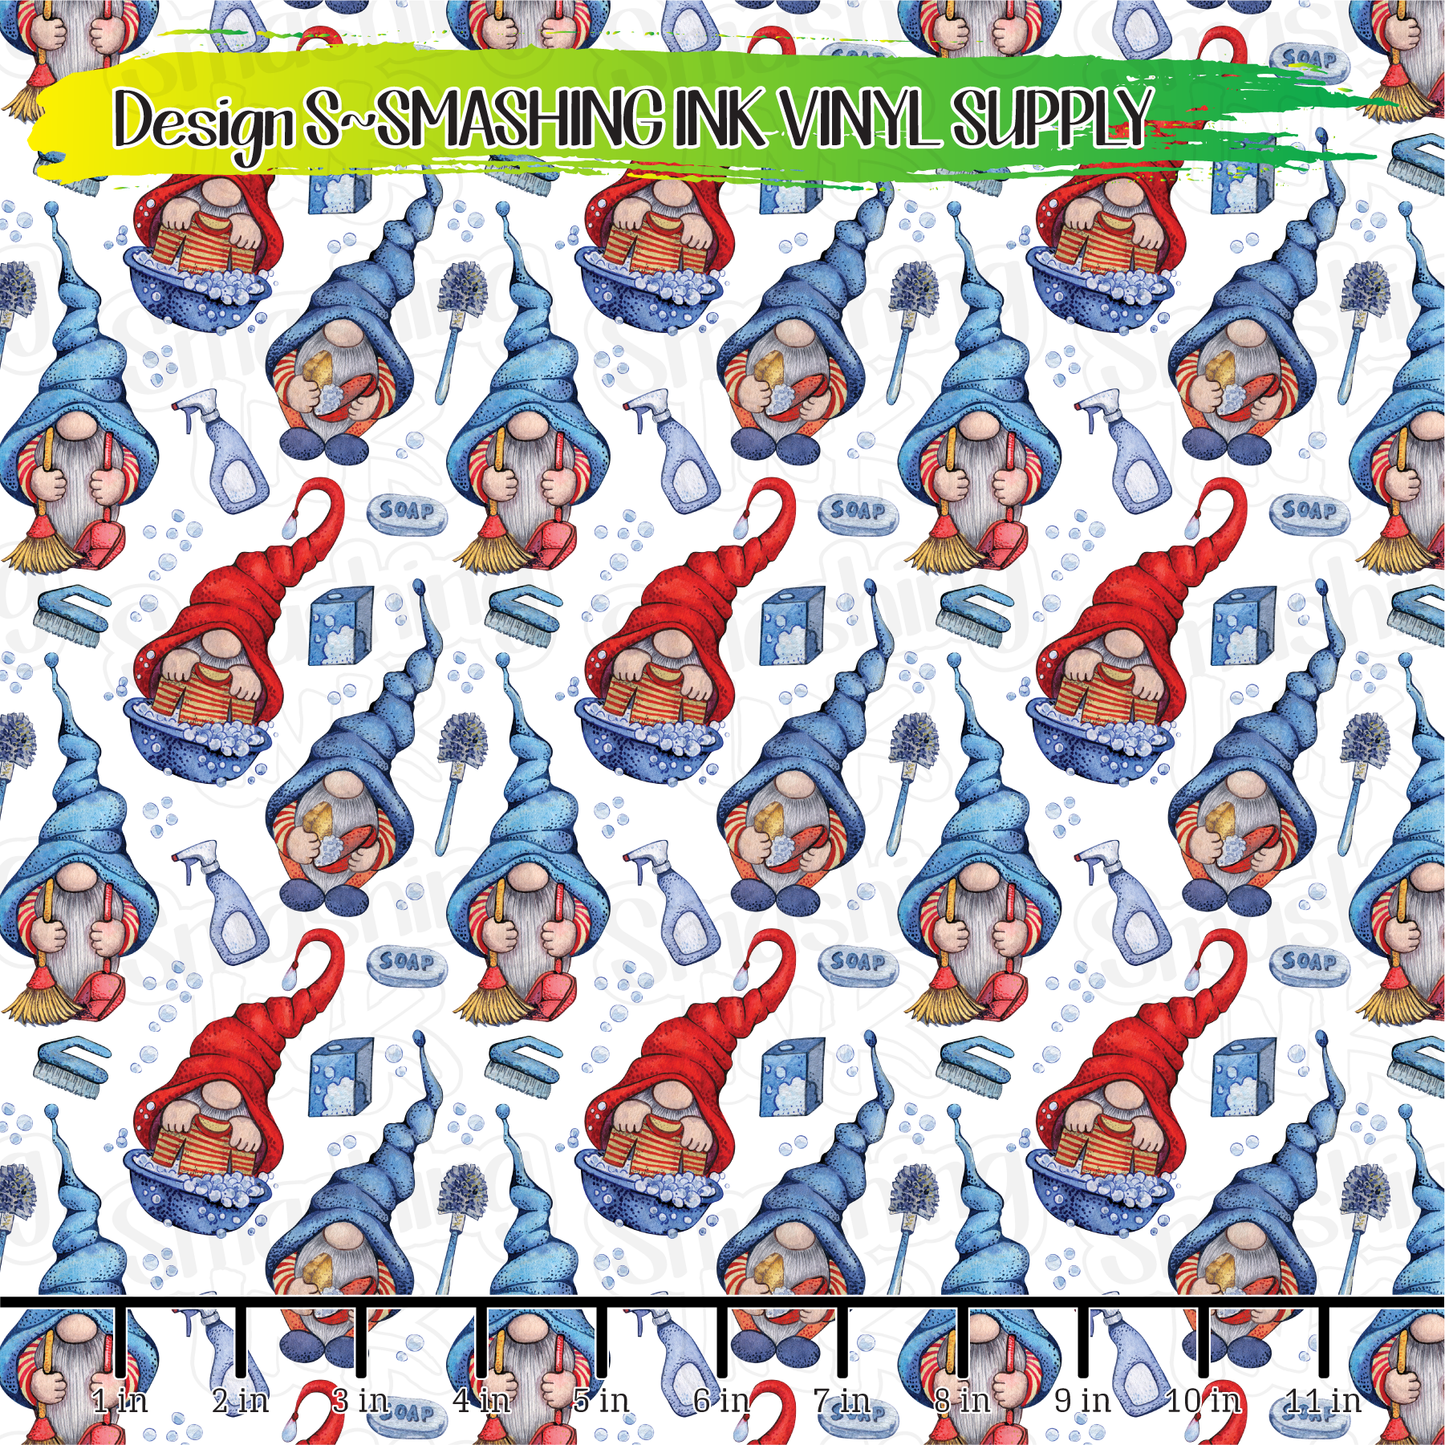 Chore Gnomes 2 ★ Pattern Vinyl | Faux Leather | Sublimation (TAT 3 BUS DAYS)